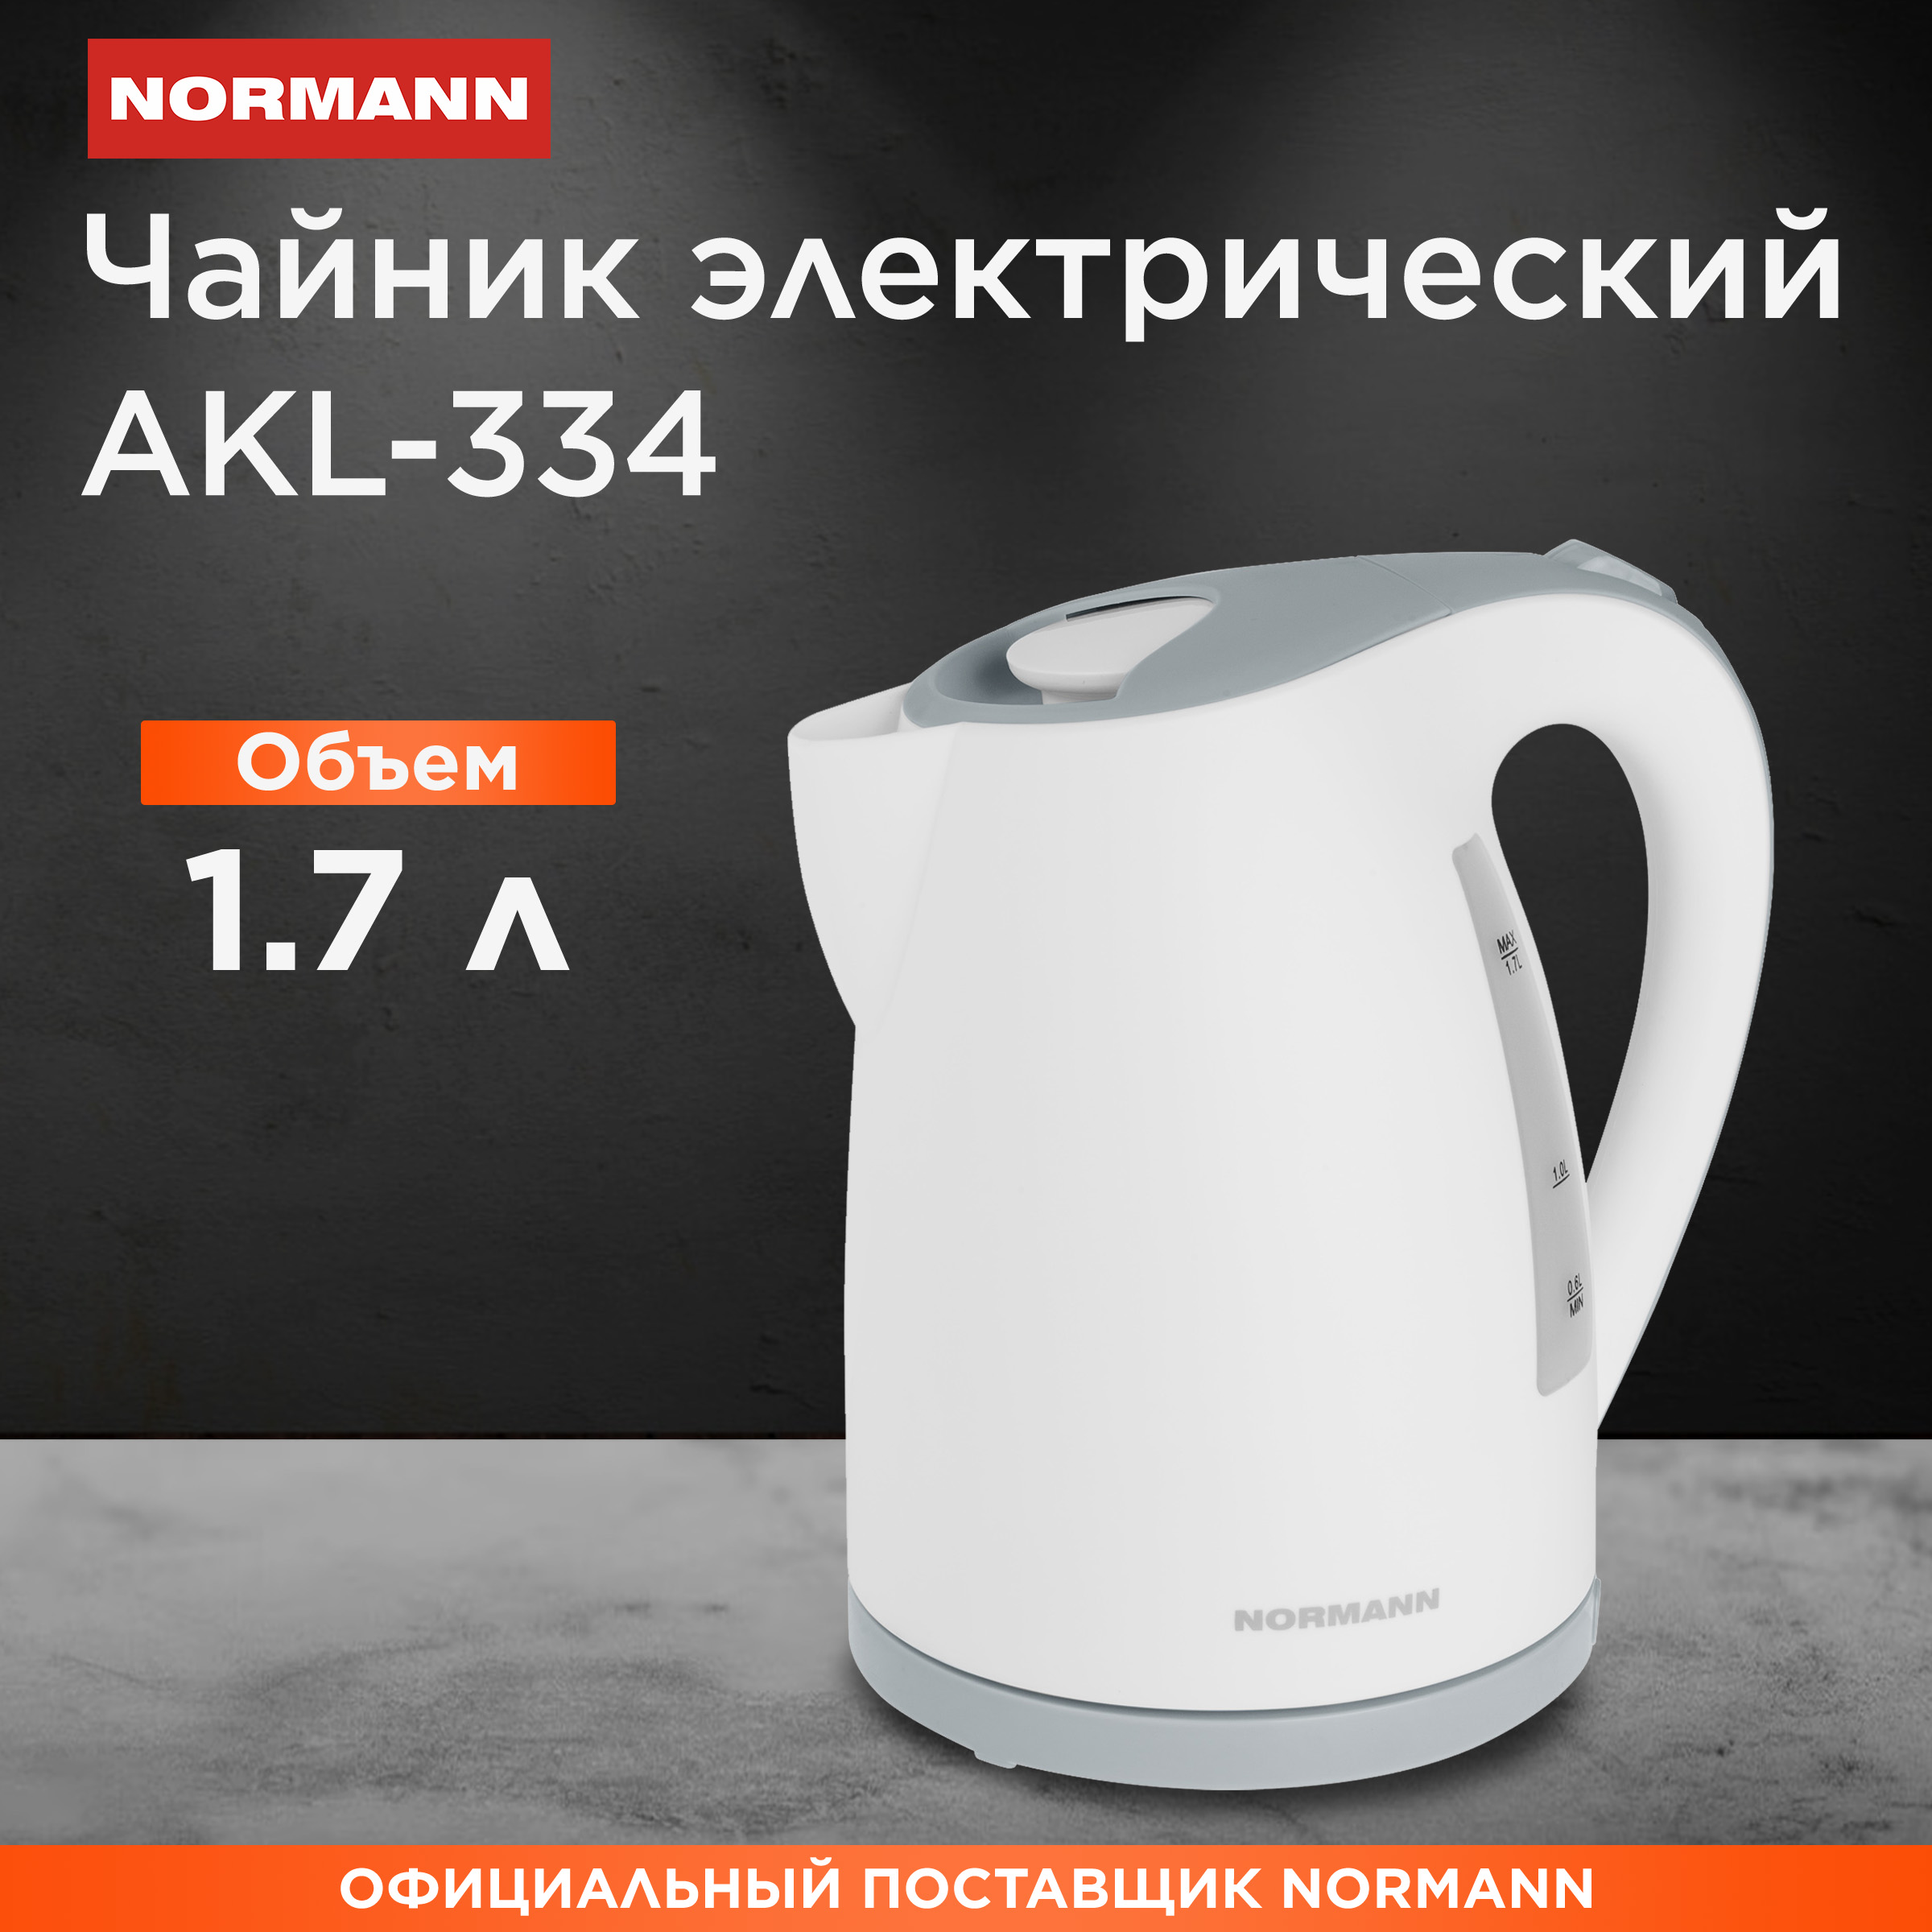 Чайник электрический NORMANN AKL-334 1.7 л белый, серый шкаф купе экспресс 1800×600×2200 мм 3 х дверный 2 лдсп зеркало серый диамант